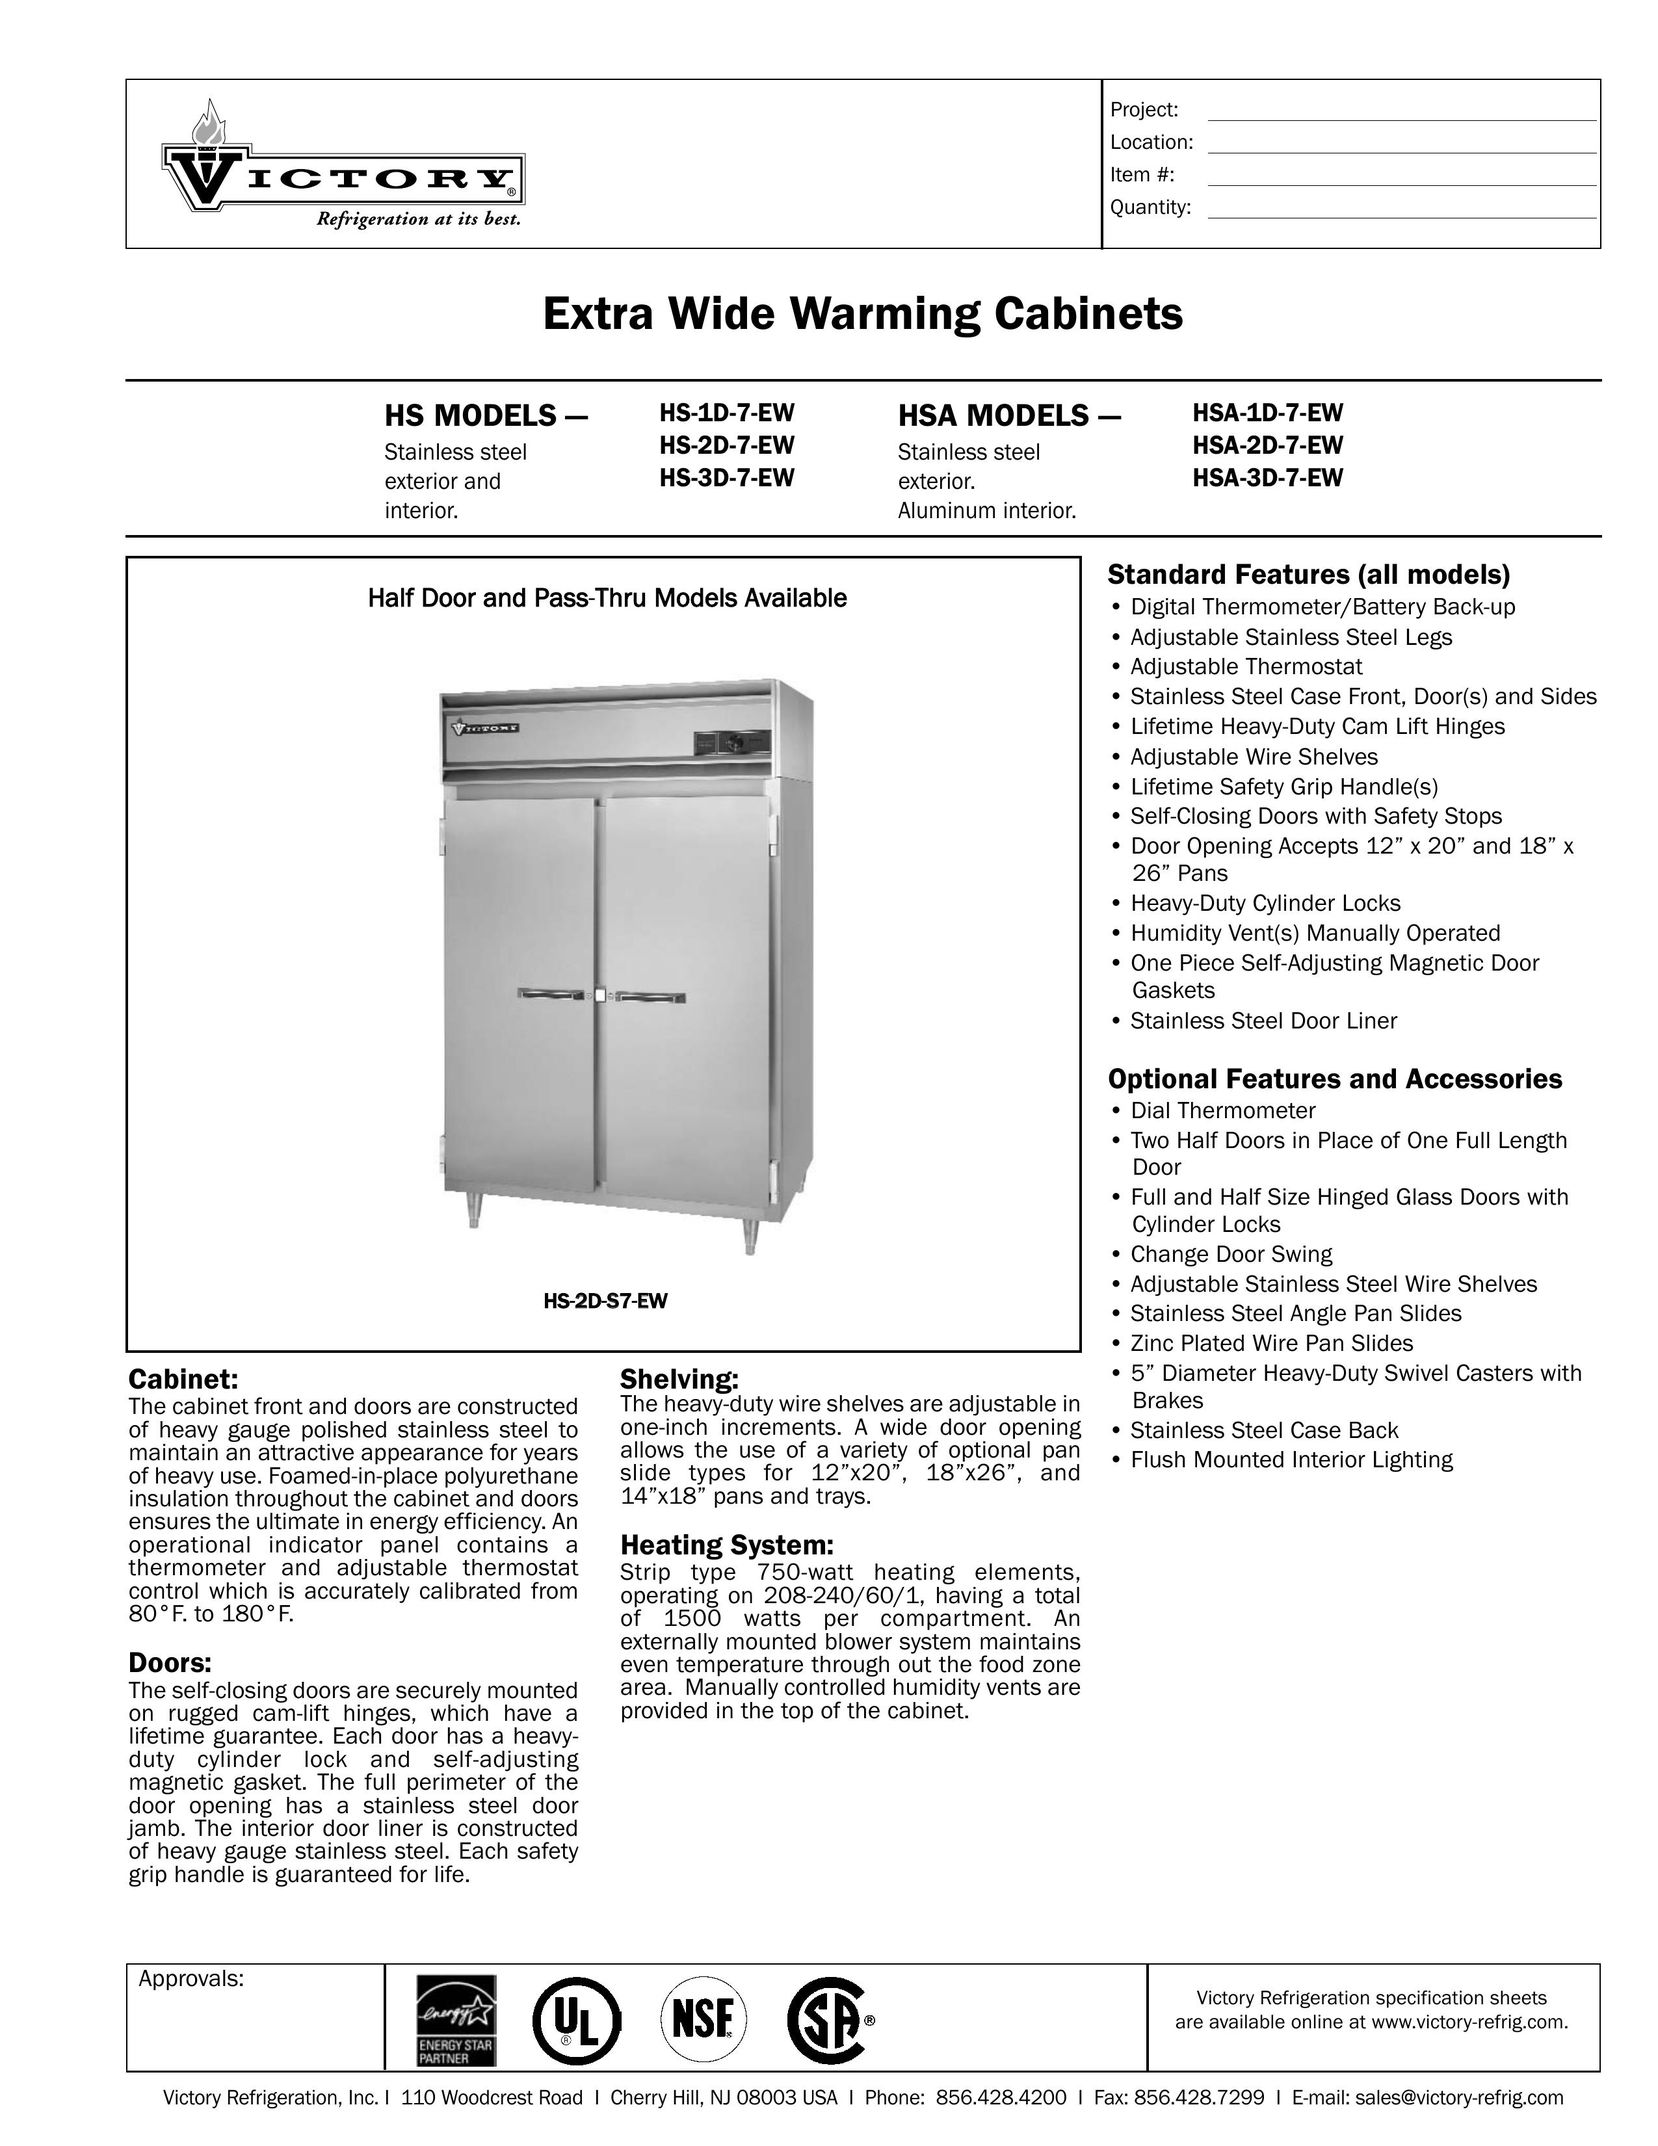 Victory Refrigeration HS-3D-7-EW Food Warmer User Manual